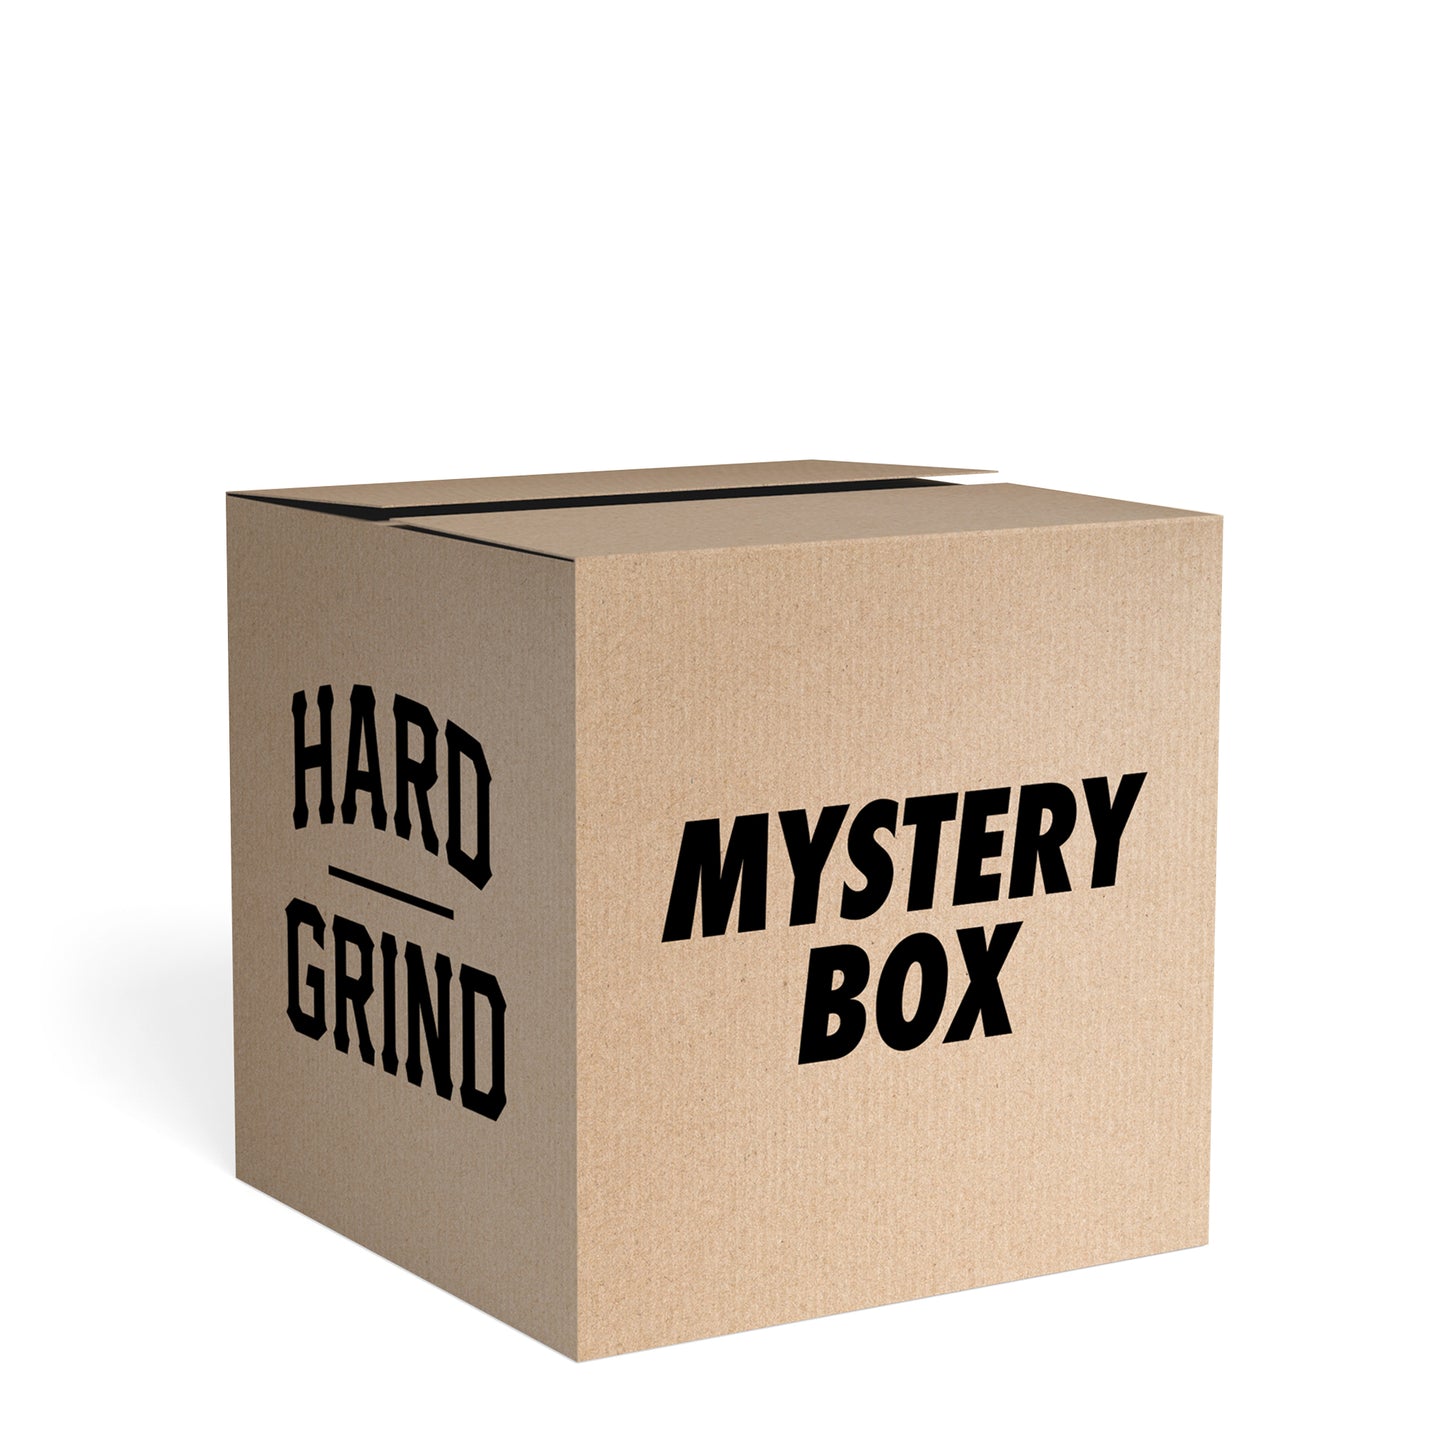 Mystery Box | Hard Grind